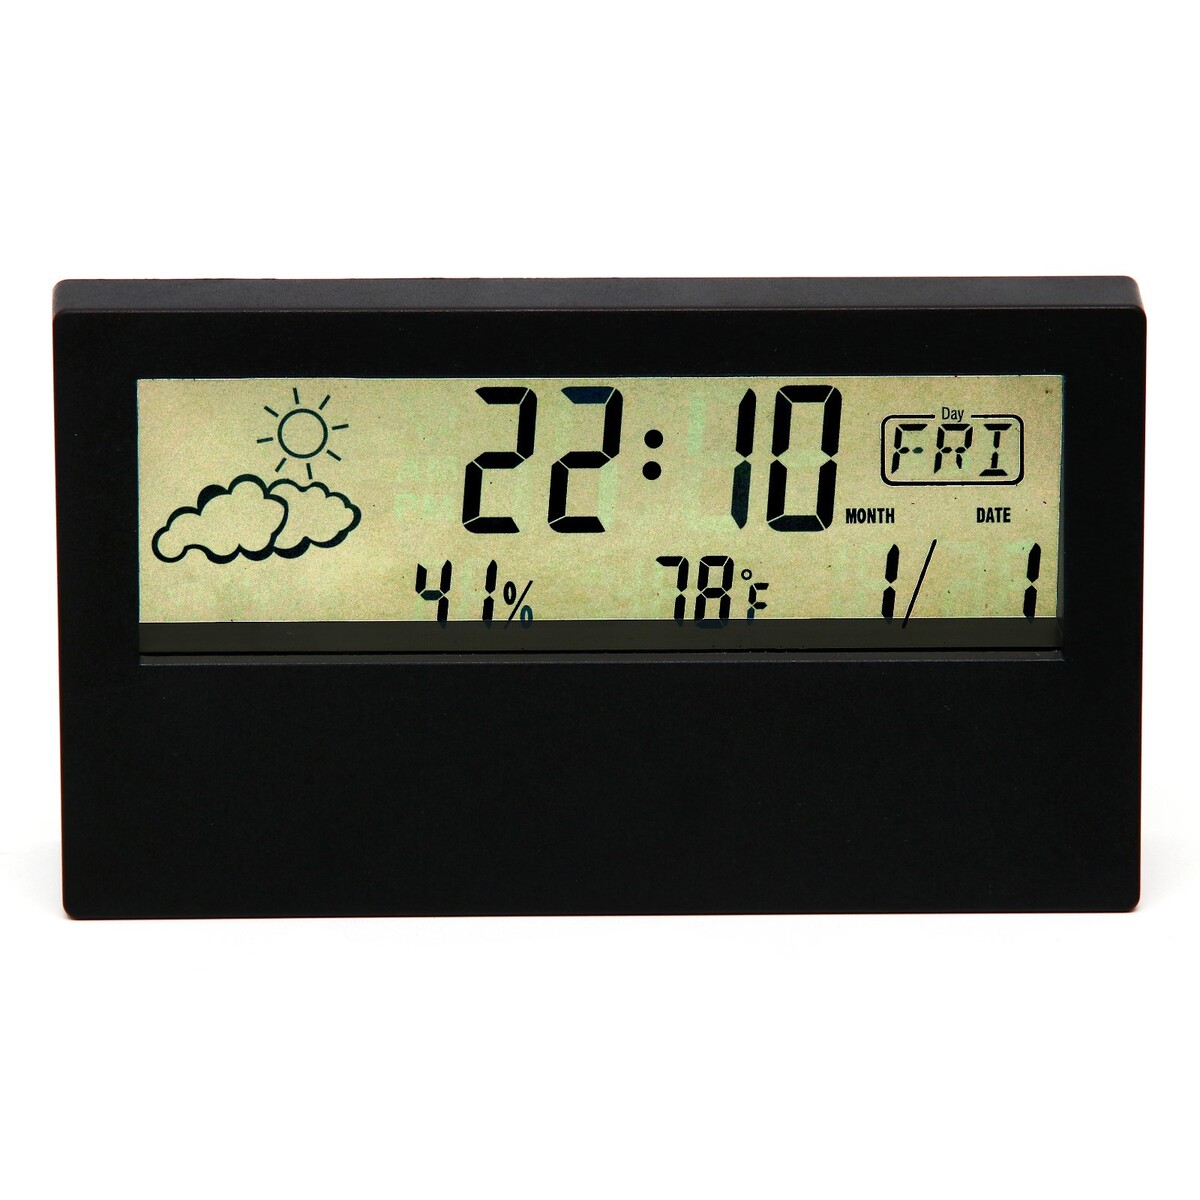 Часы - будильник электронные настольные: термометр, календарь, гигрометр, 13.3 х 7.4 см песочные часы с термометром гигрометром 29х14х8 3 см v t080 2